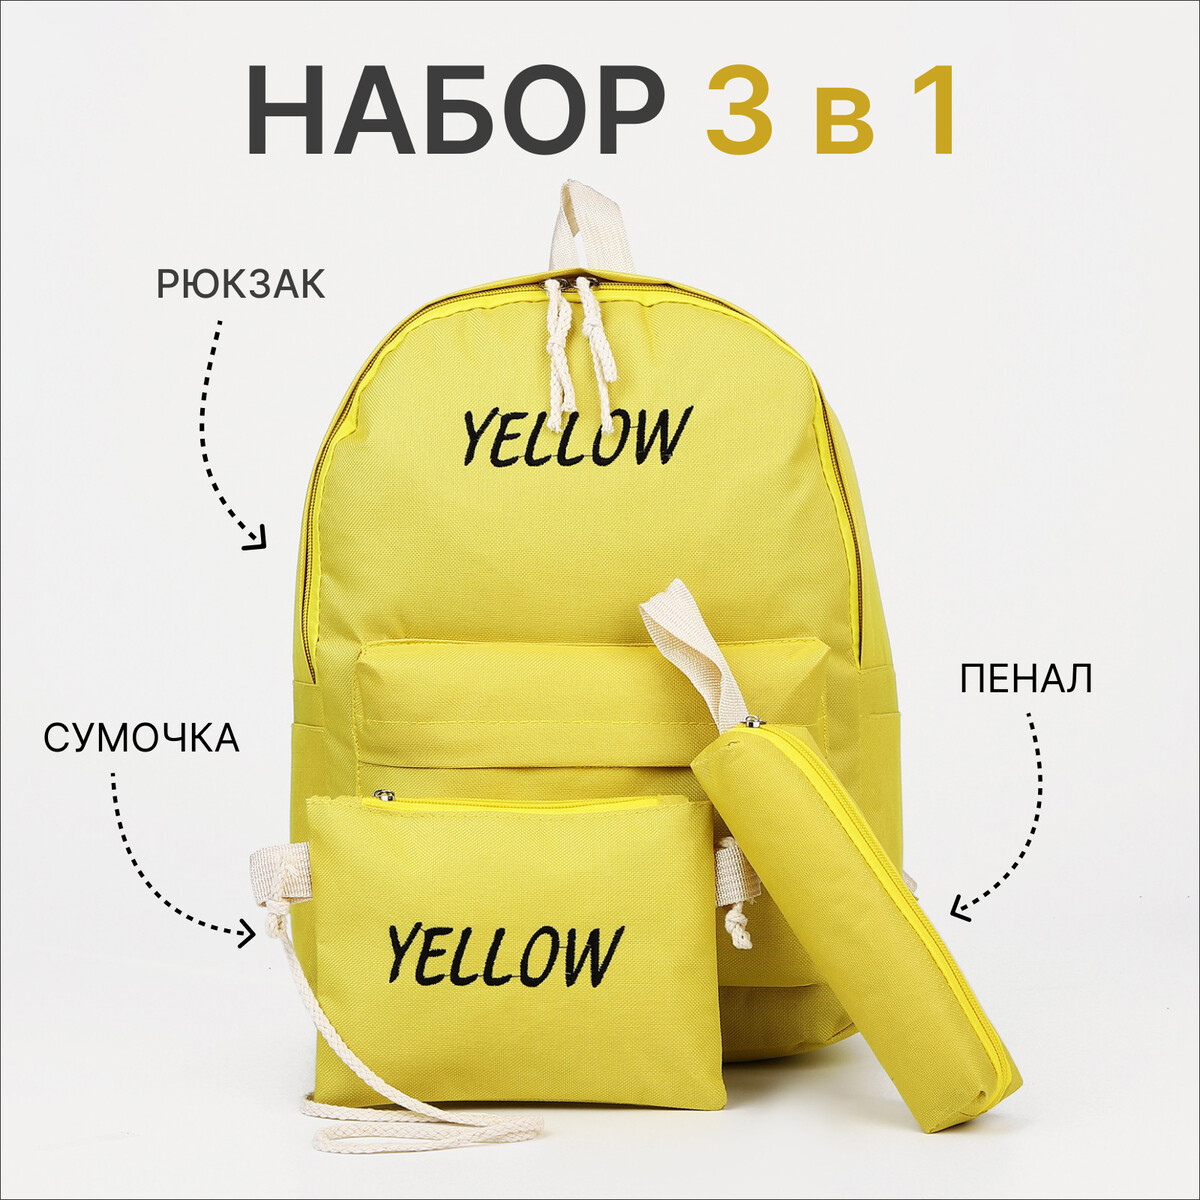 Набор рюкзак на молнии из текстиля, косметичка, пенал, цвет желтый